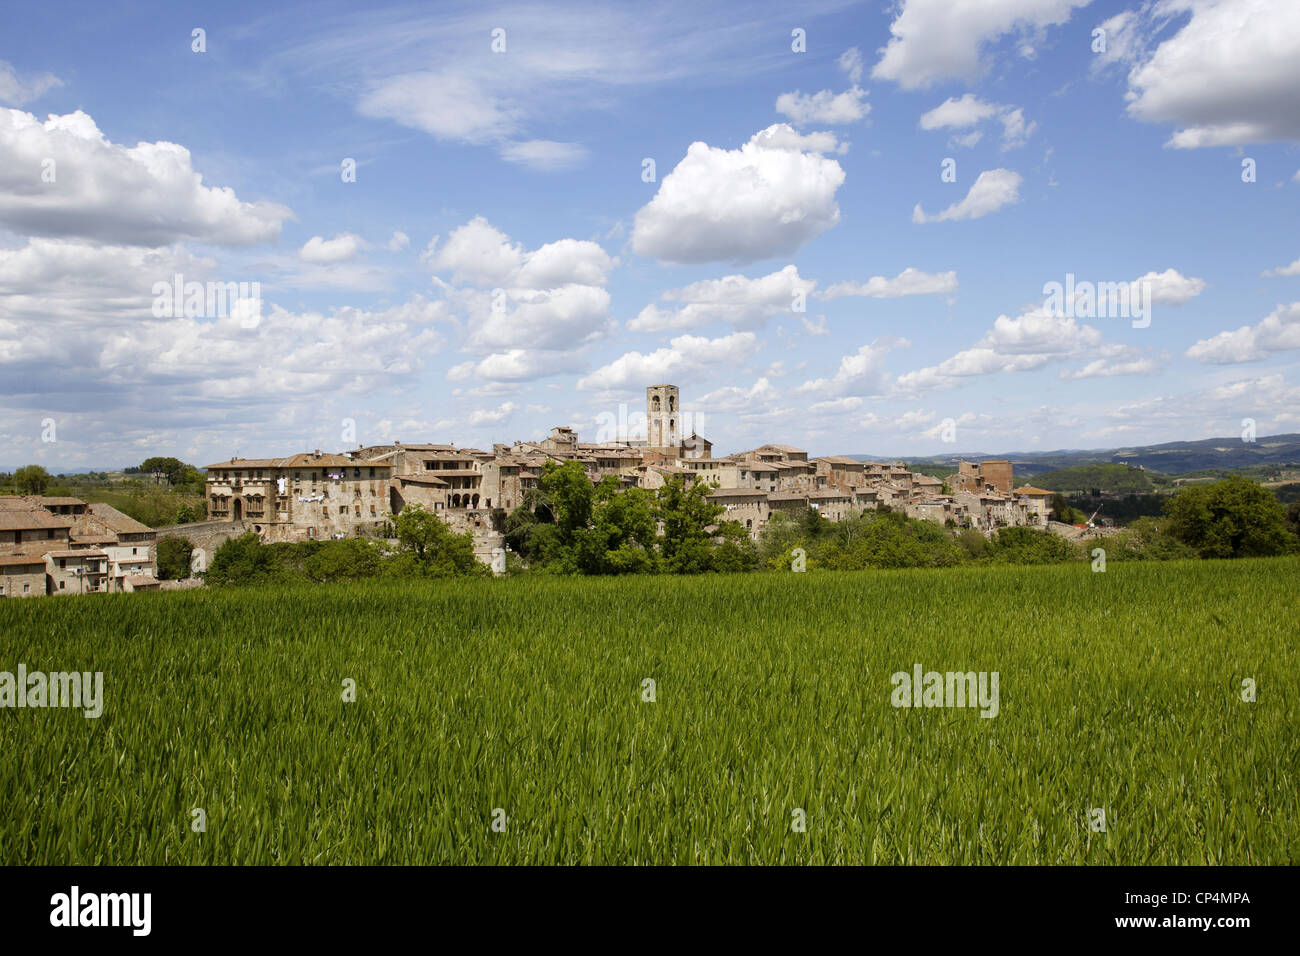 Italy - Tuscany Region - Colle Val d'Elsa (Si). Stock Photo